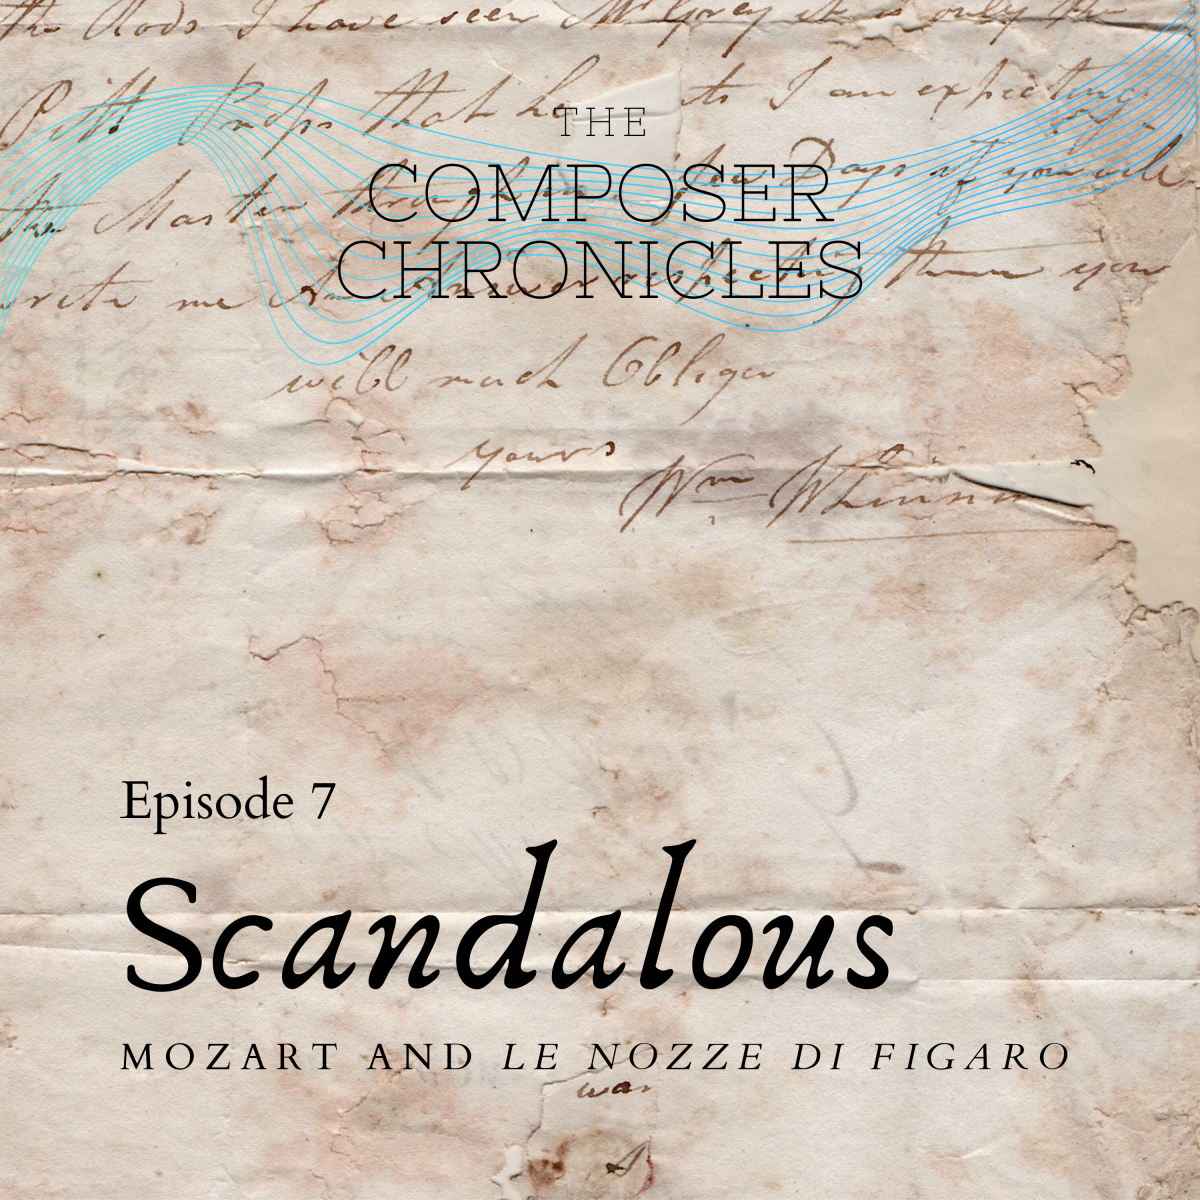 Ep. 7: Scandalous – Mozart and Le nozze di Figaro